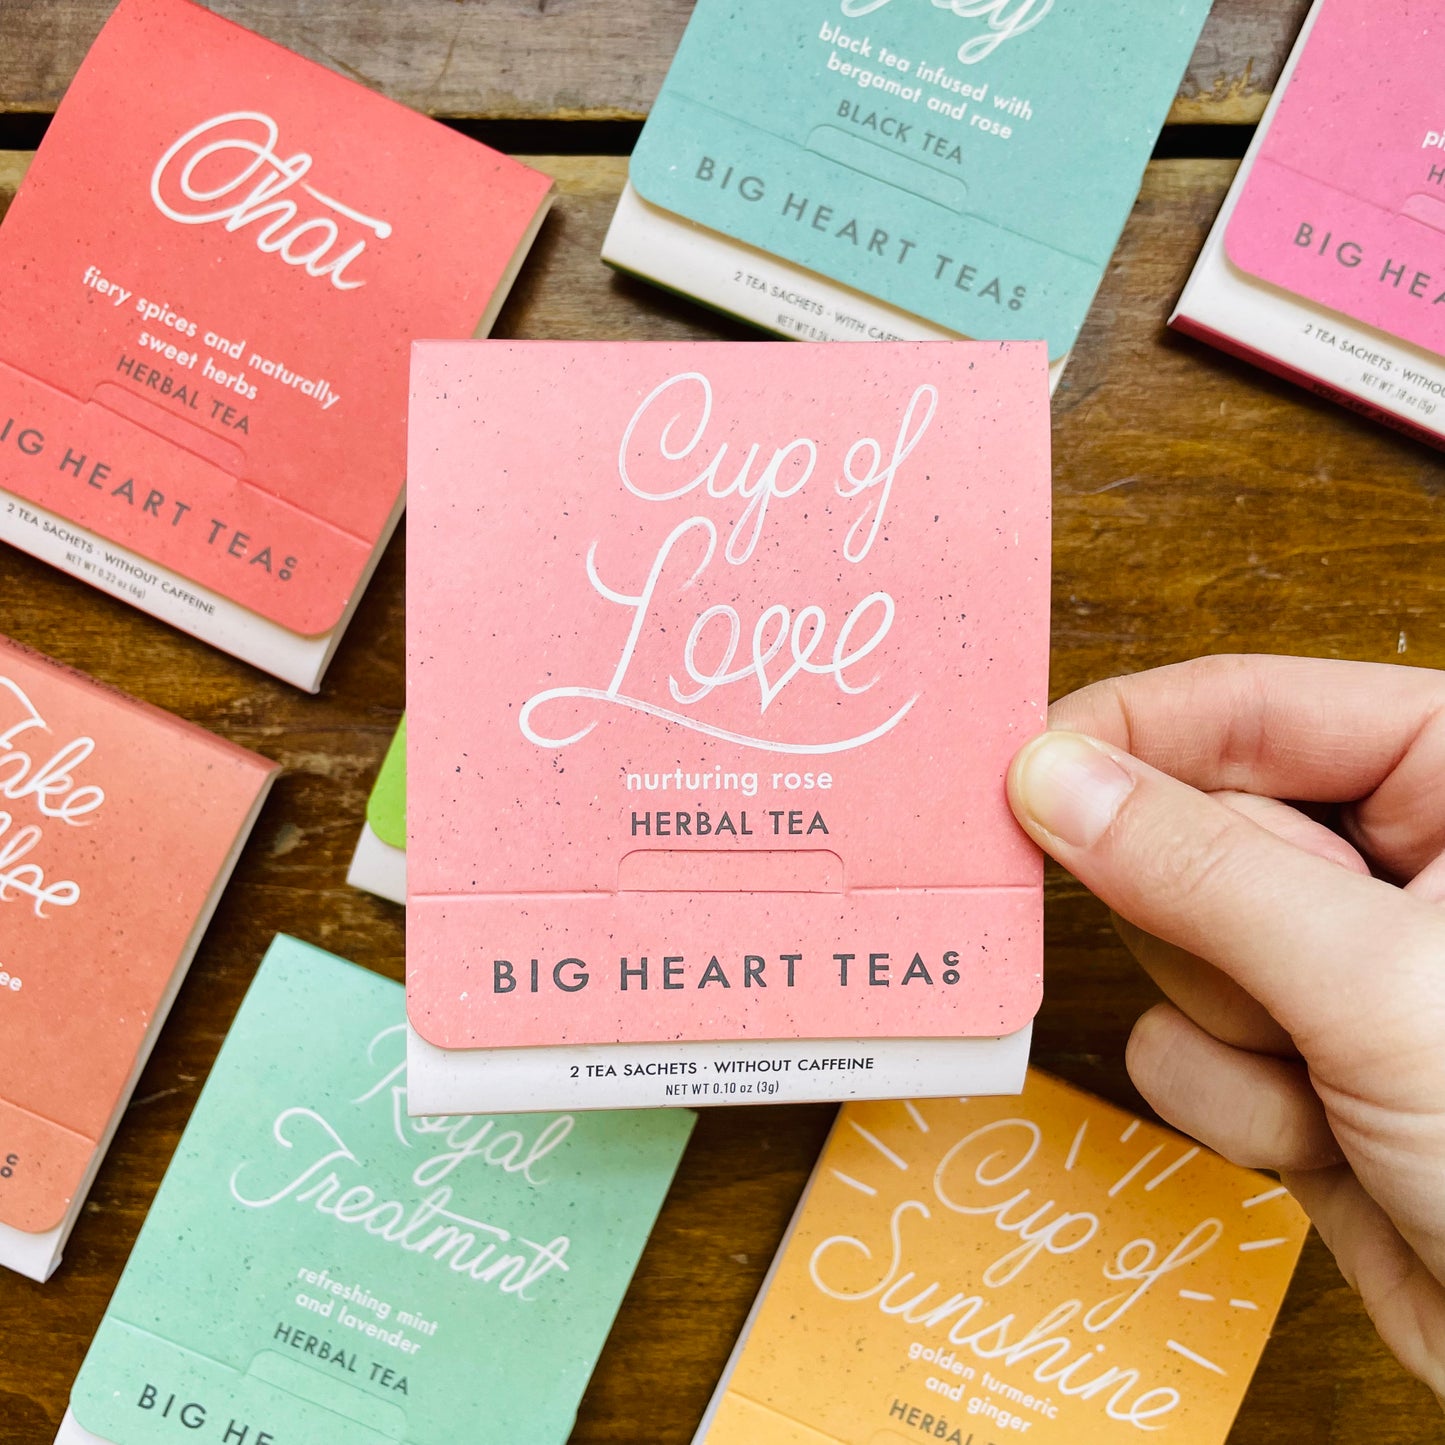 Big Heart Tea's Signature Sample